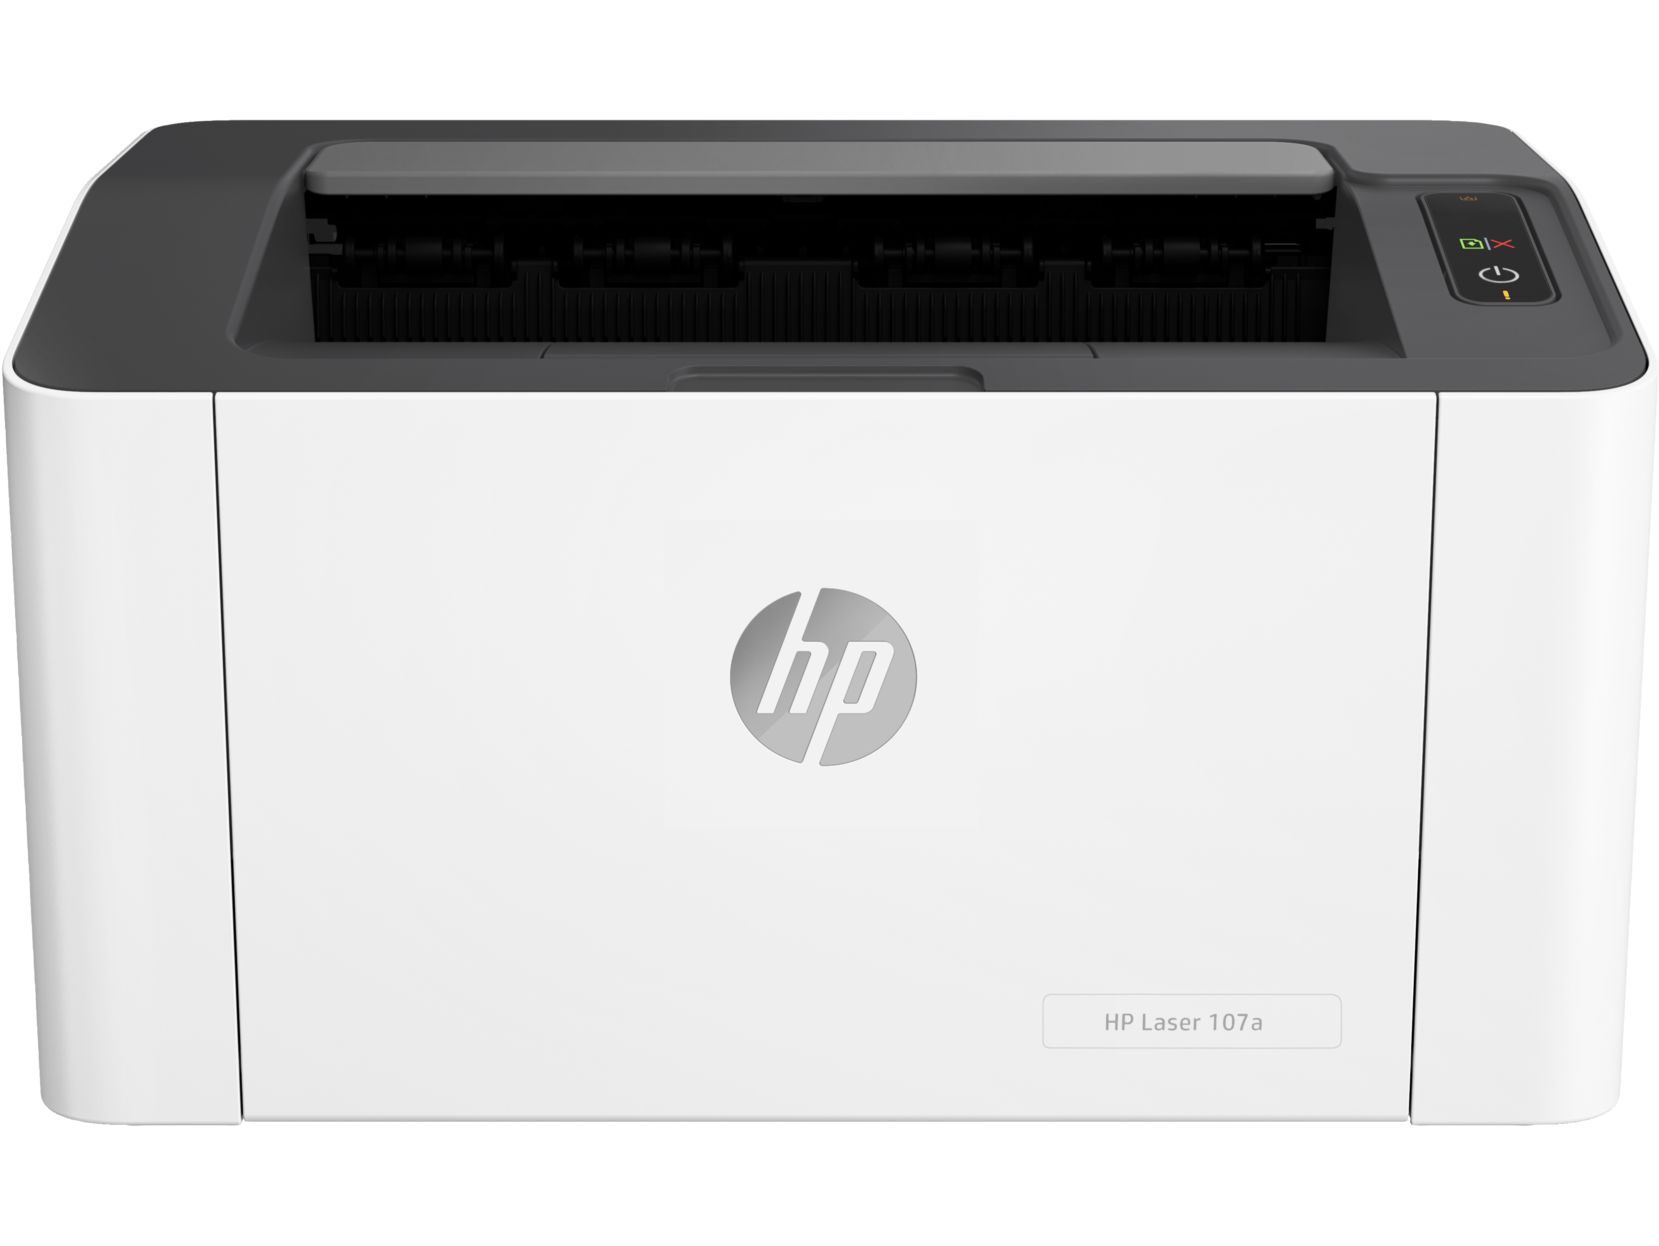 Принтер HP Laser 107a принтер hp laser m107w 4zb78a 193015506459